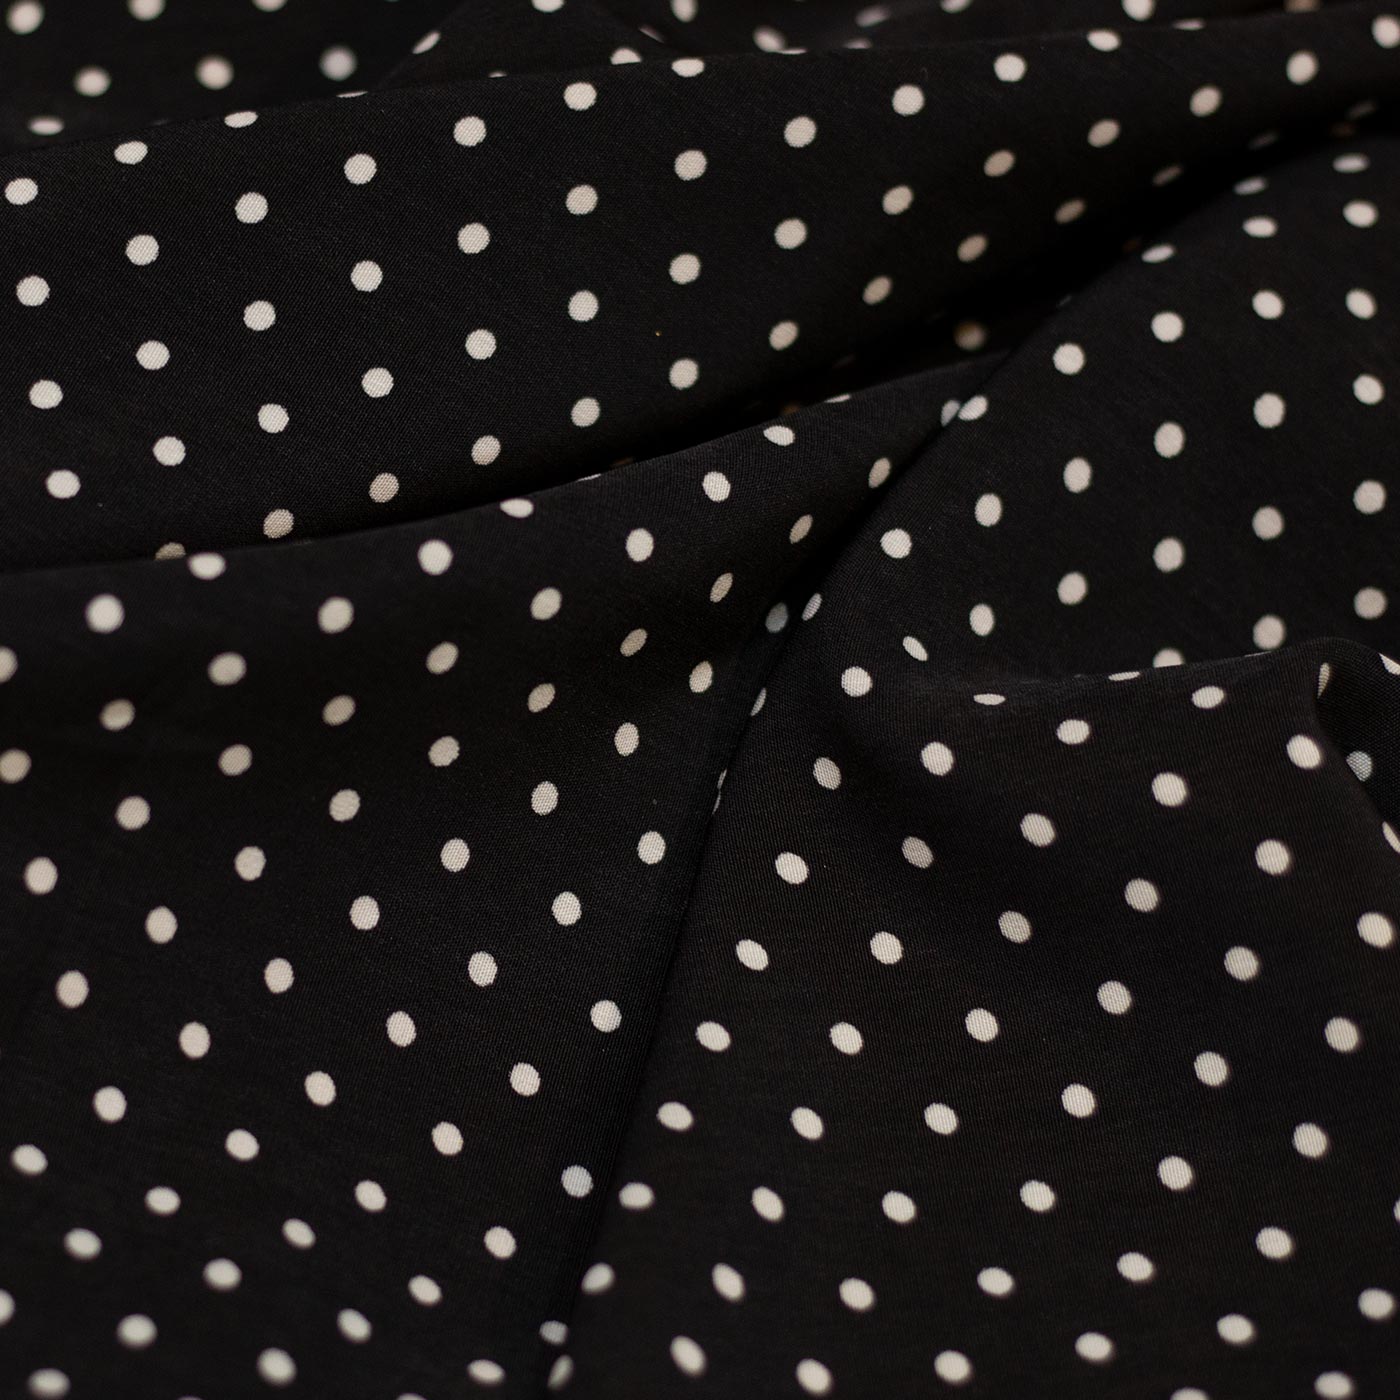 White Polka Dot Black Printed Chiffon Fabric